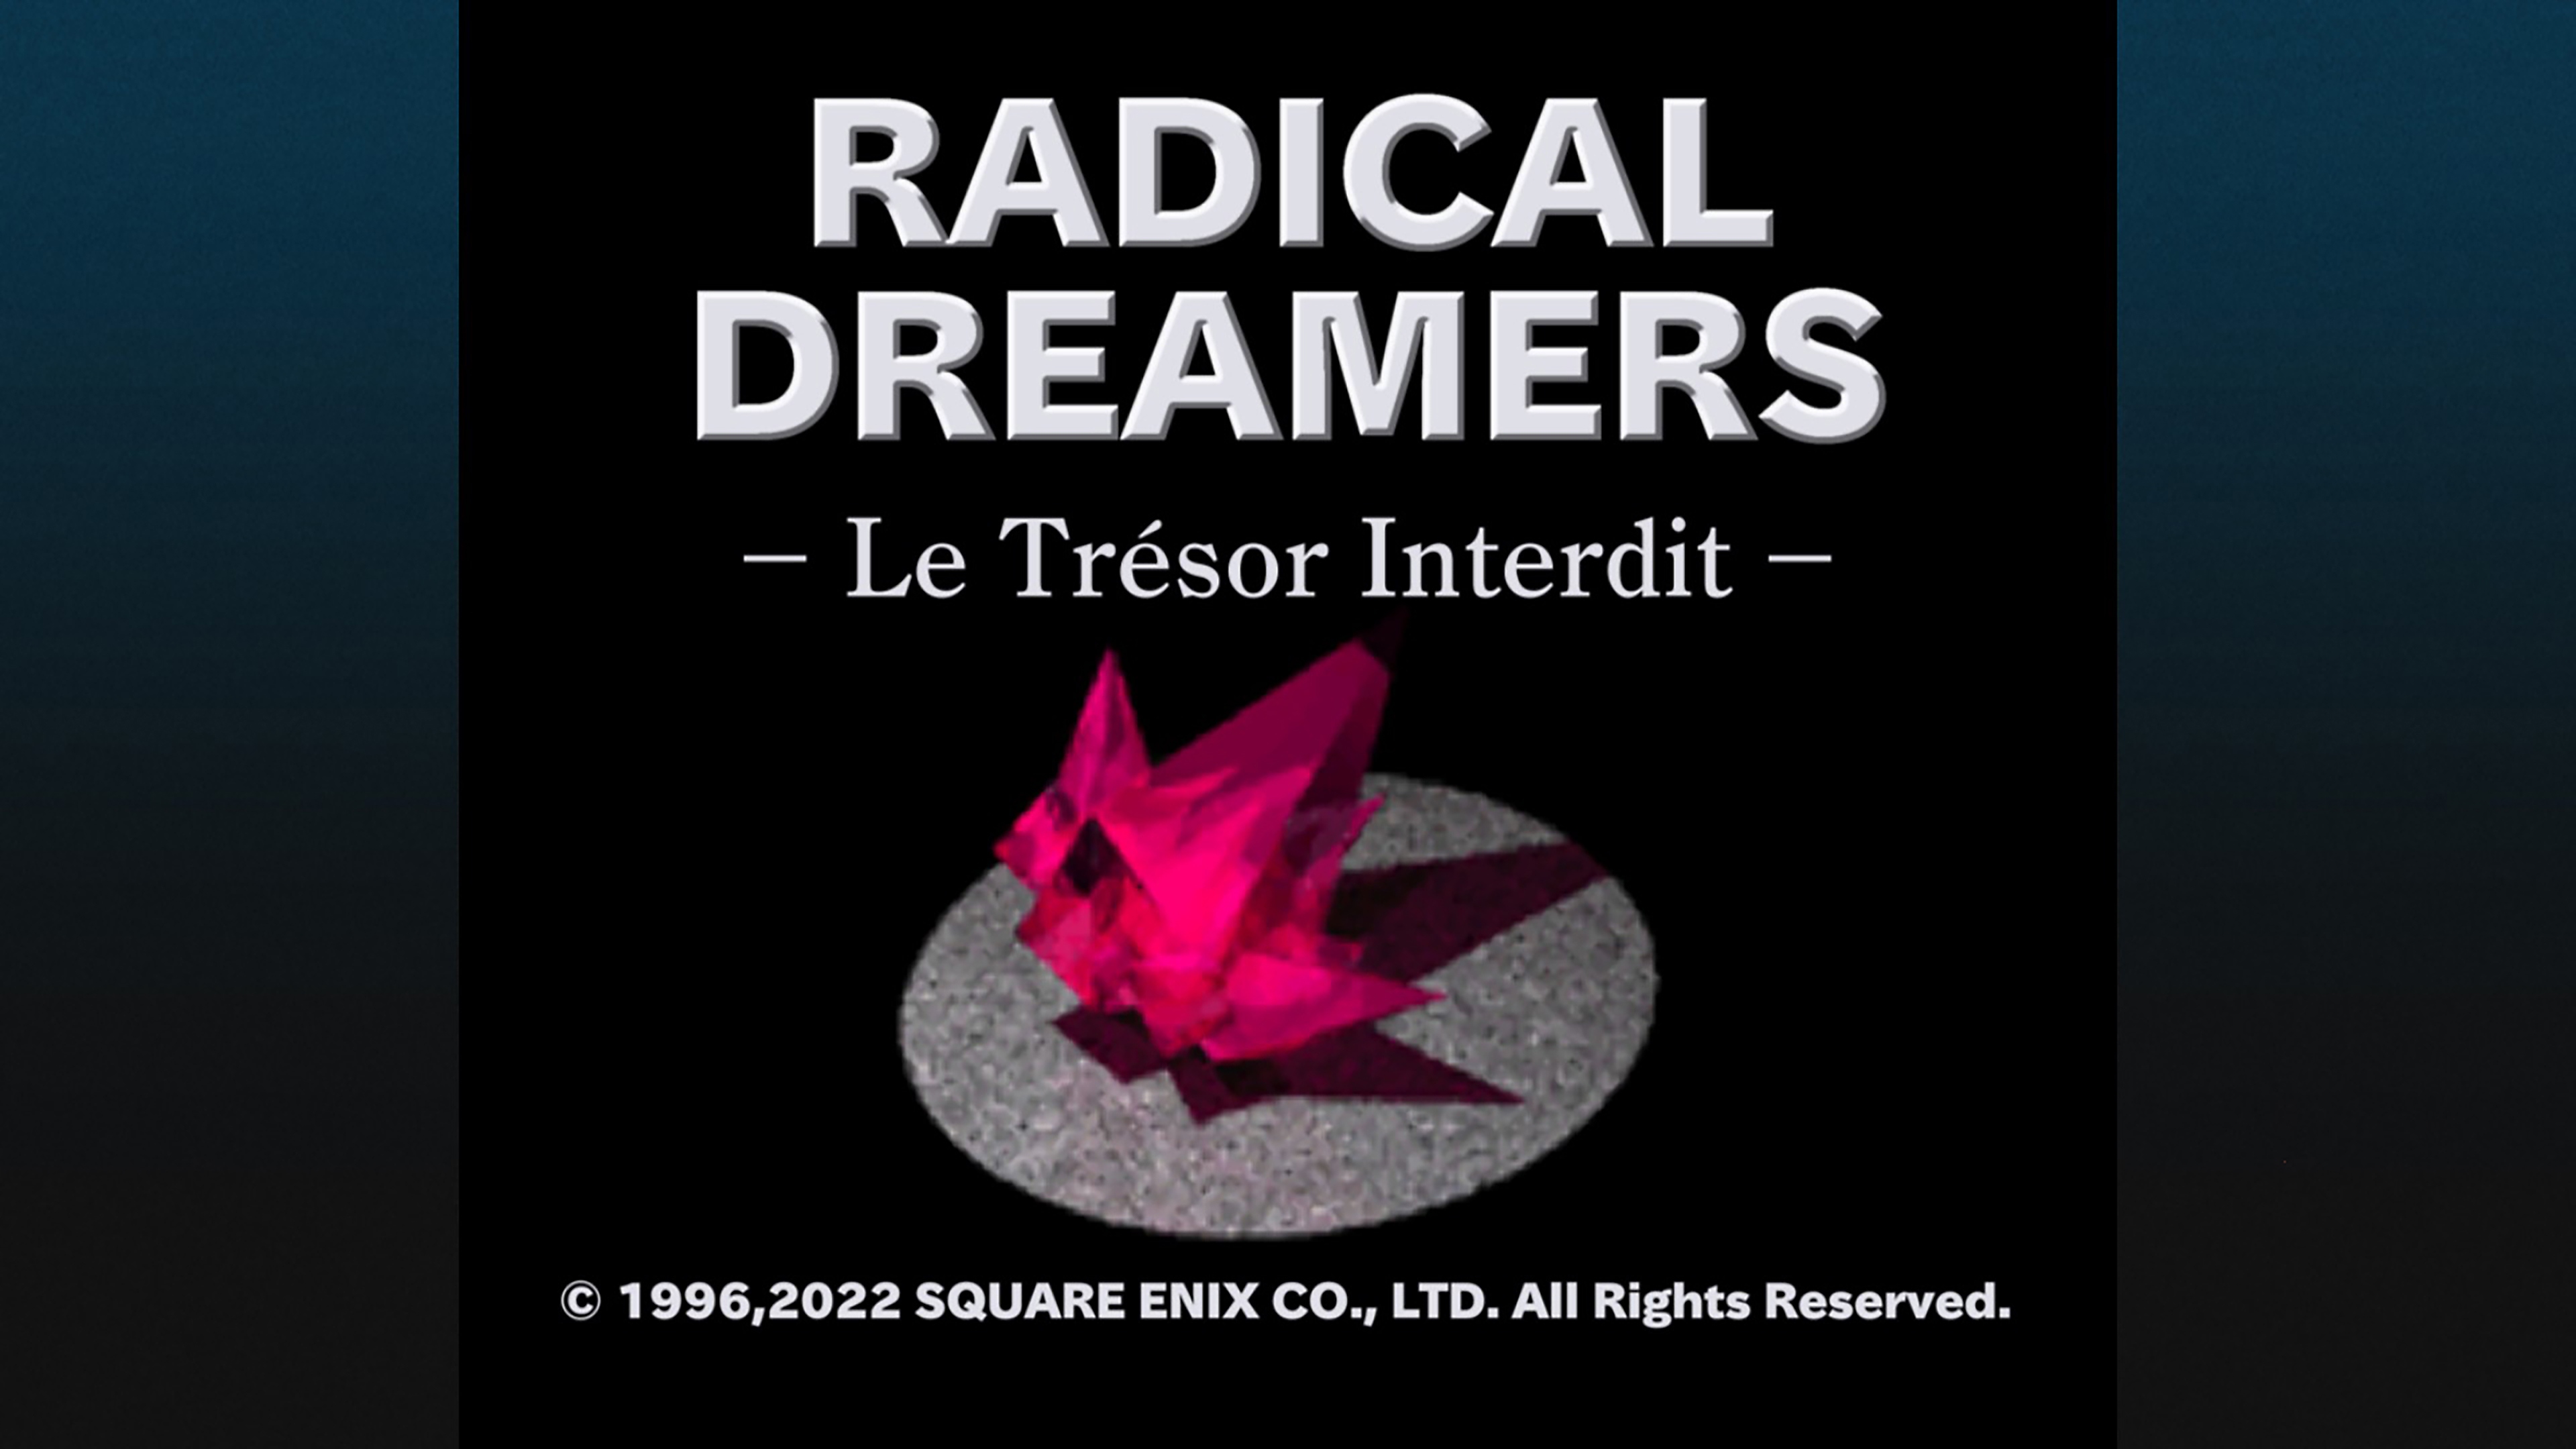 Chrono Cross: The Radical Dreamers Editionin kuvakaappaus, jossa näkyy Le Trésor Interdit -näyttö